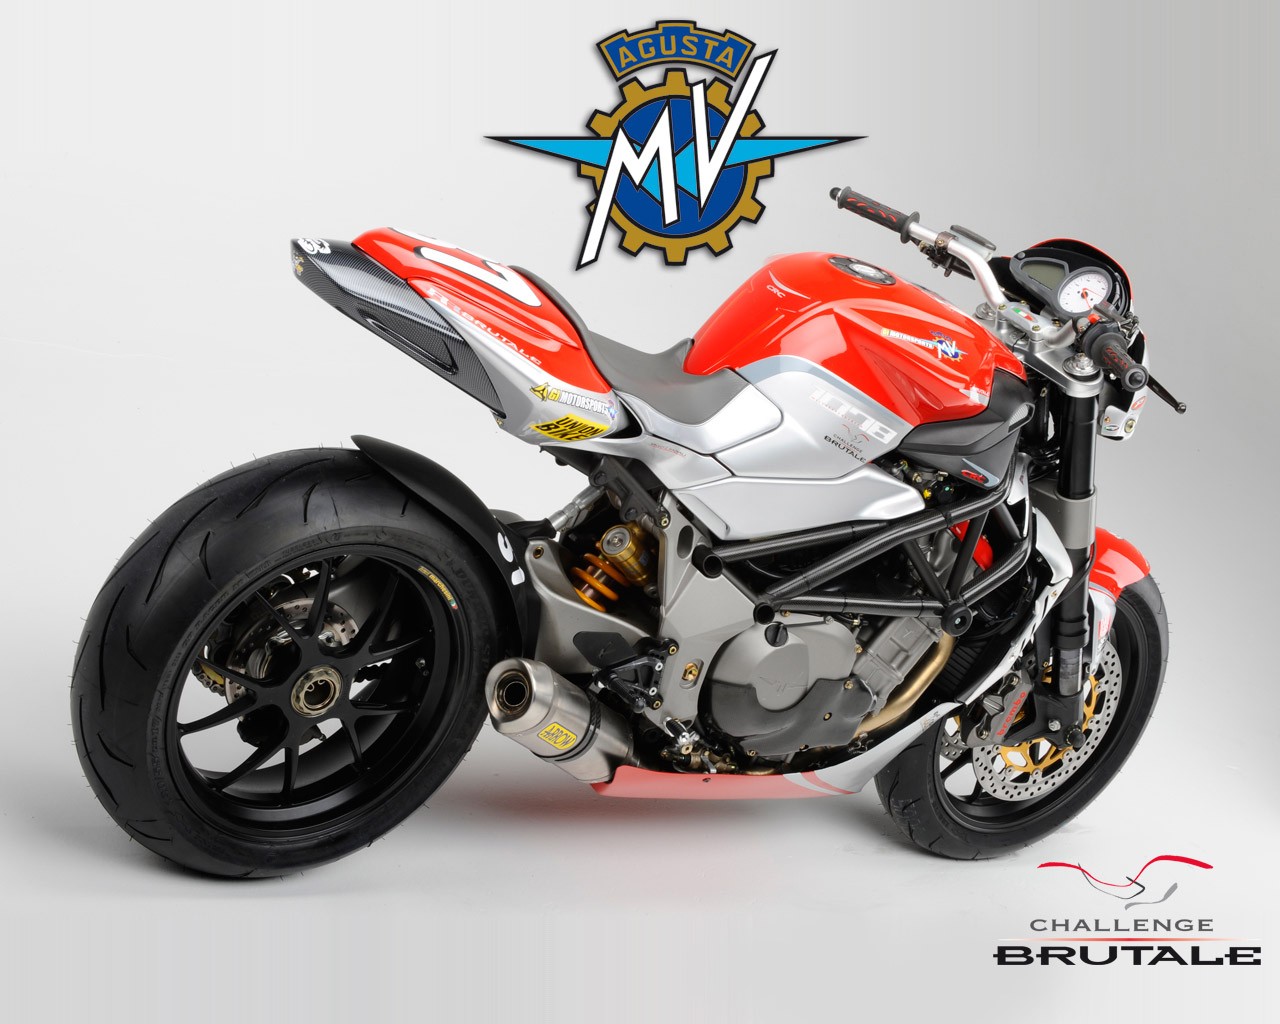 General 1280x1024 motorcycle MV agusta MV Agusta Brutale simple background vehicle Italian motorcycles